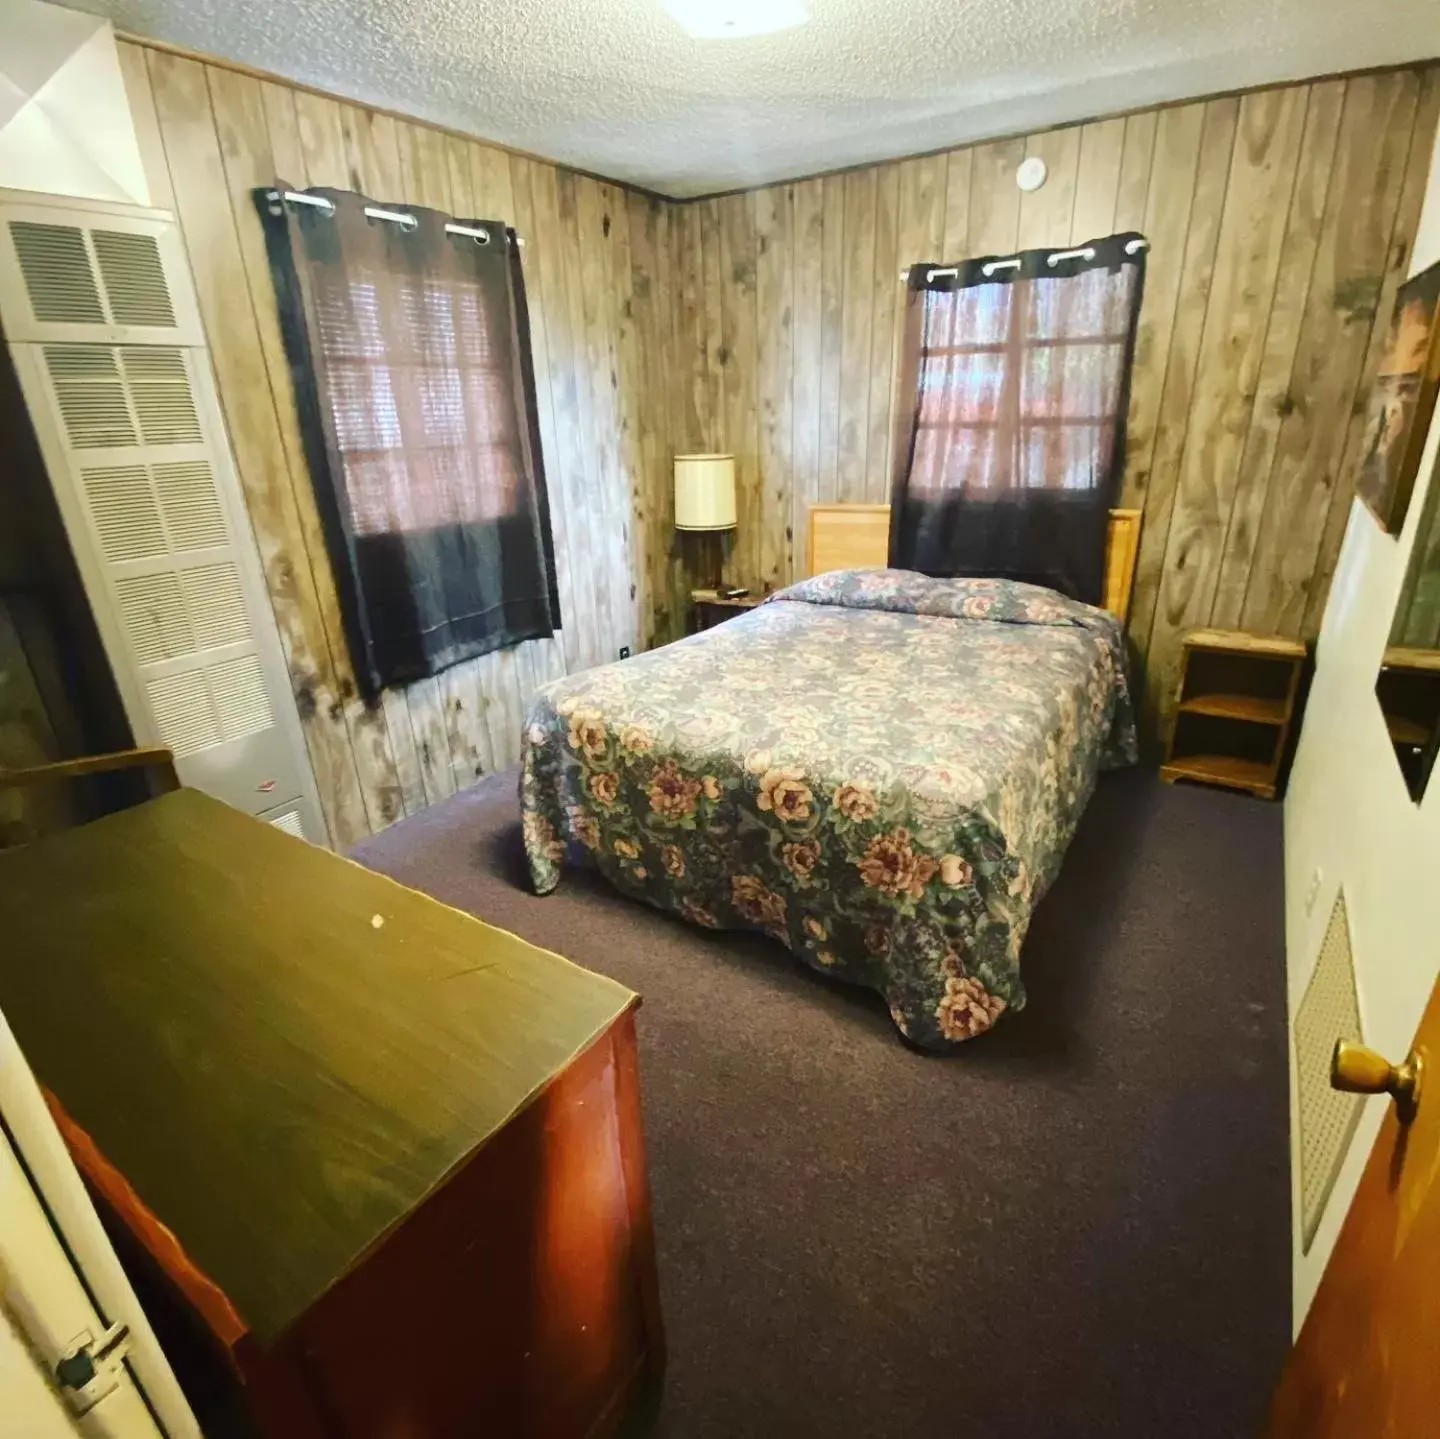 Bed, Room Photo in Rainbow Motel